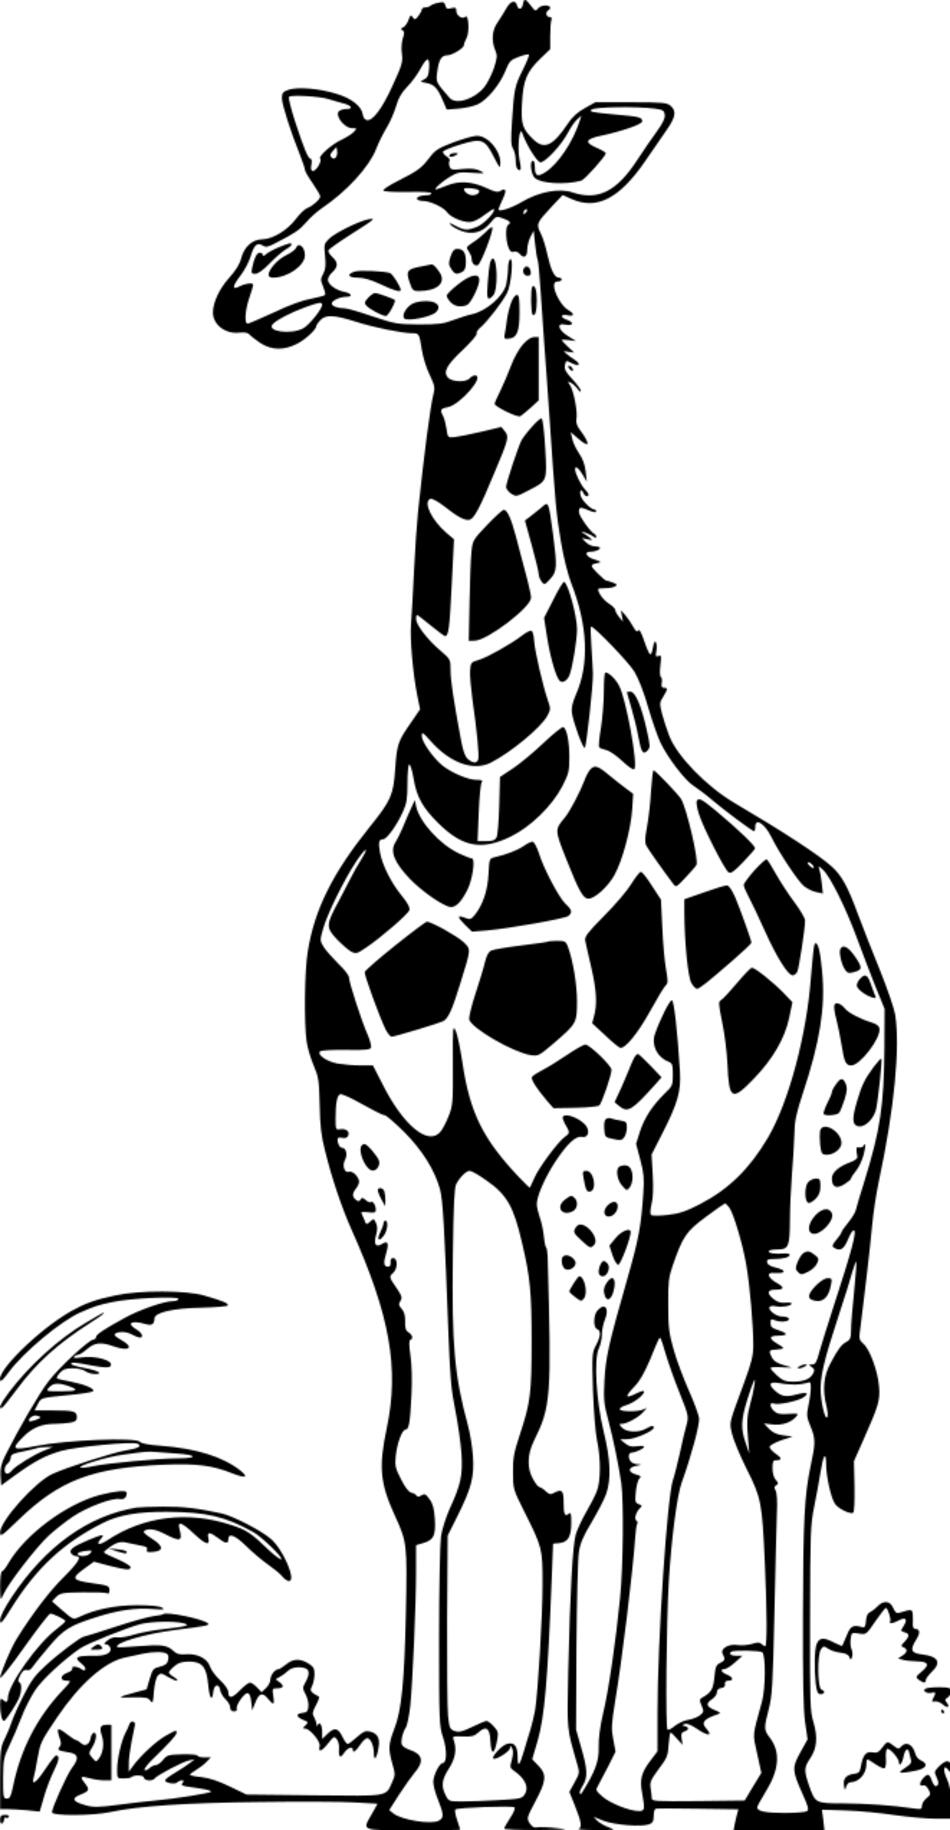 Livre de coloriage La girafe mange (Verticale)